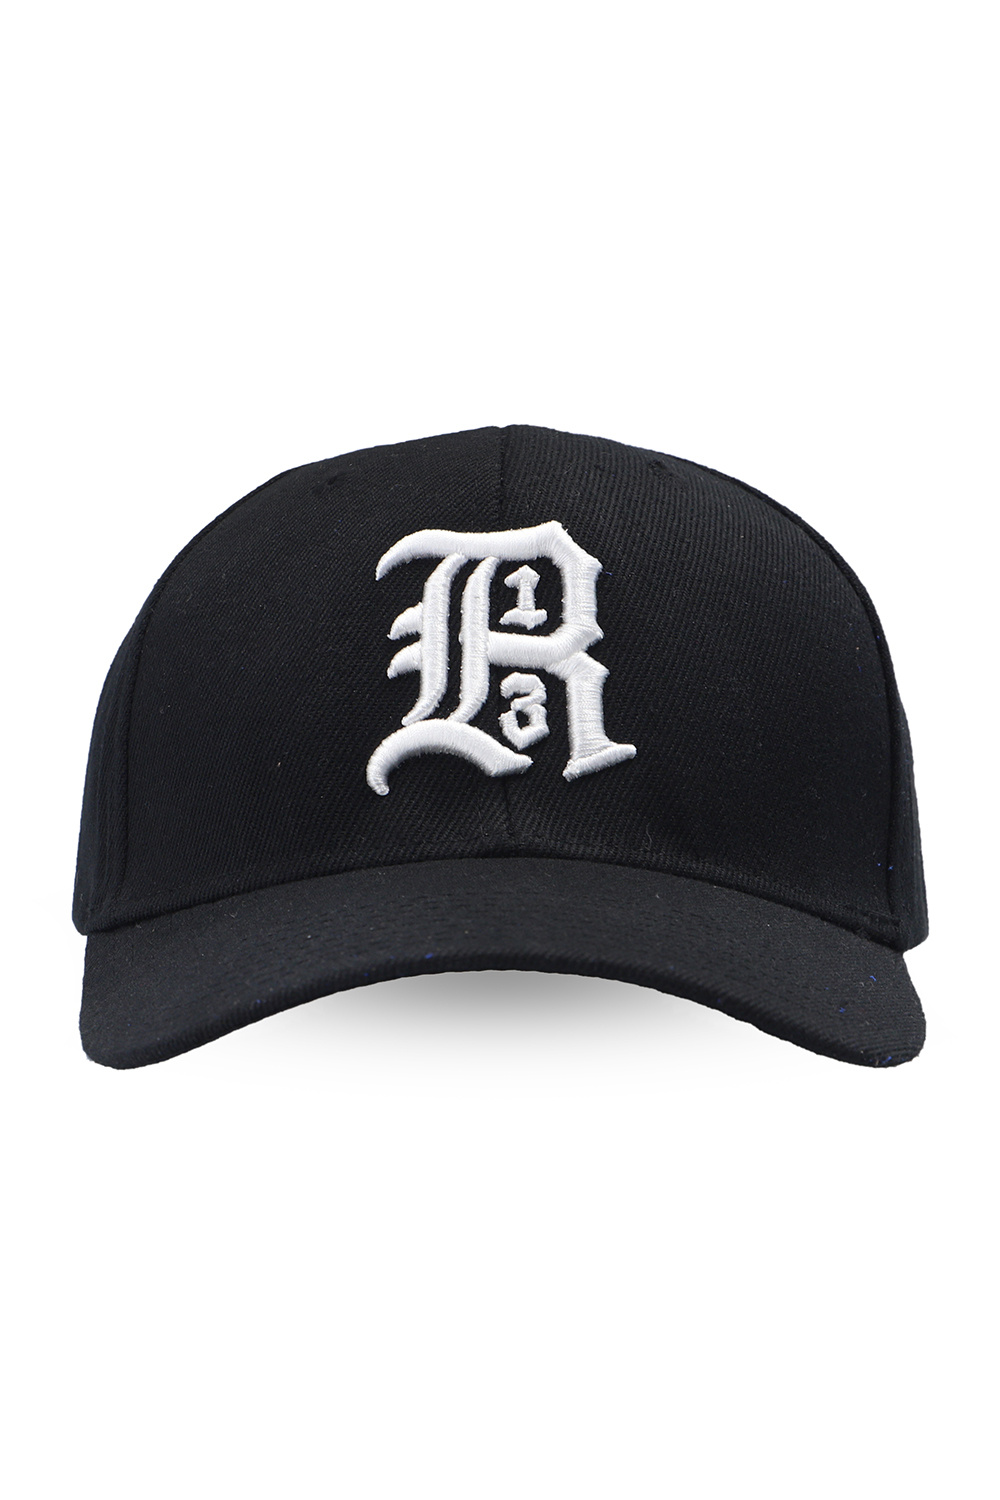 R13: Black Logo Bucket Hat